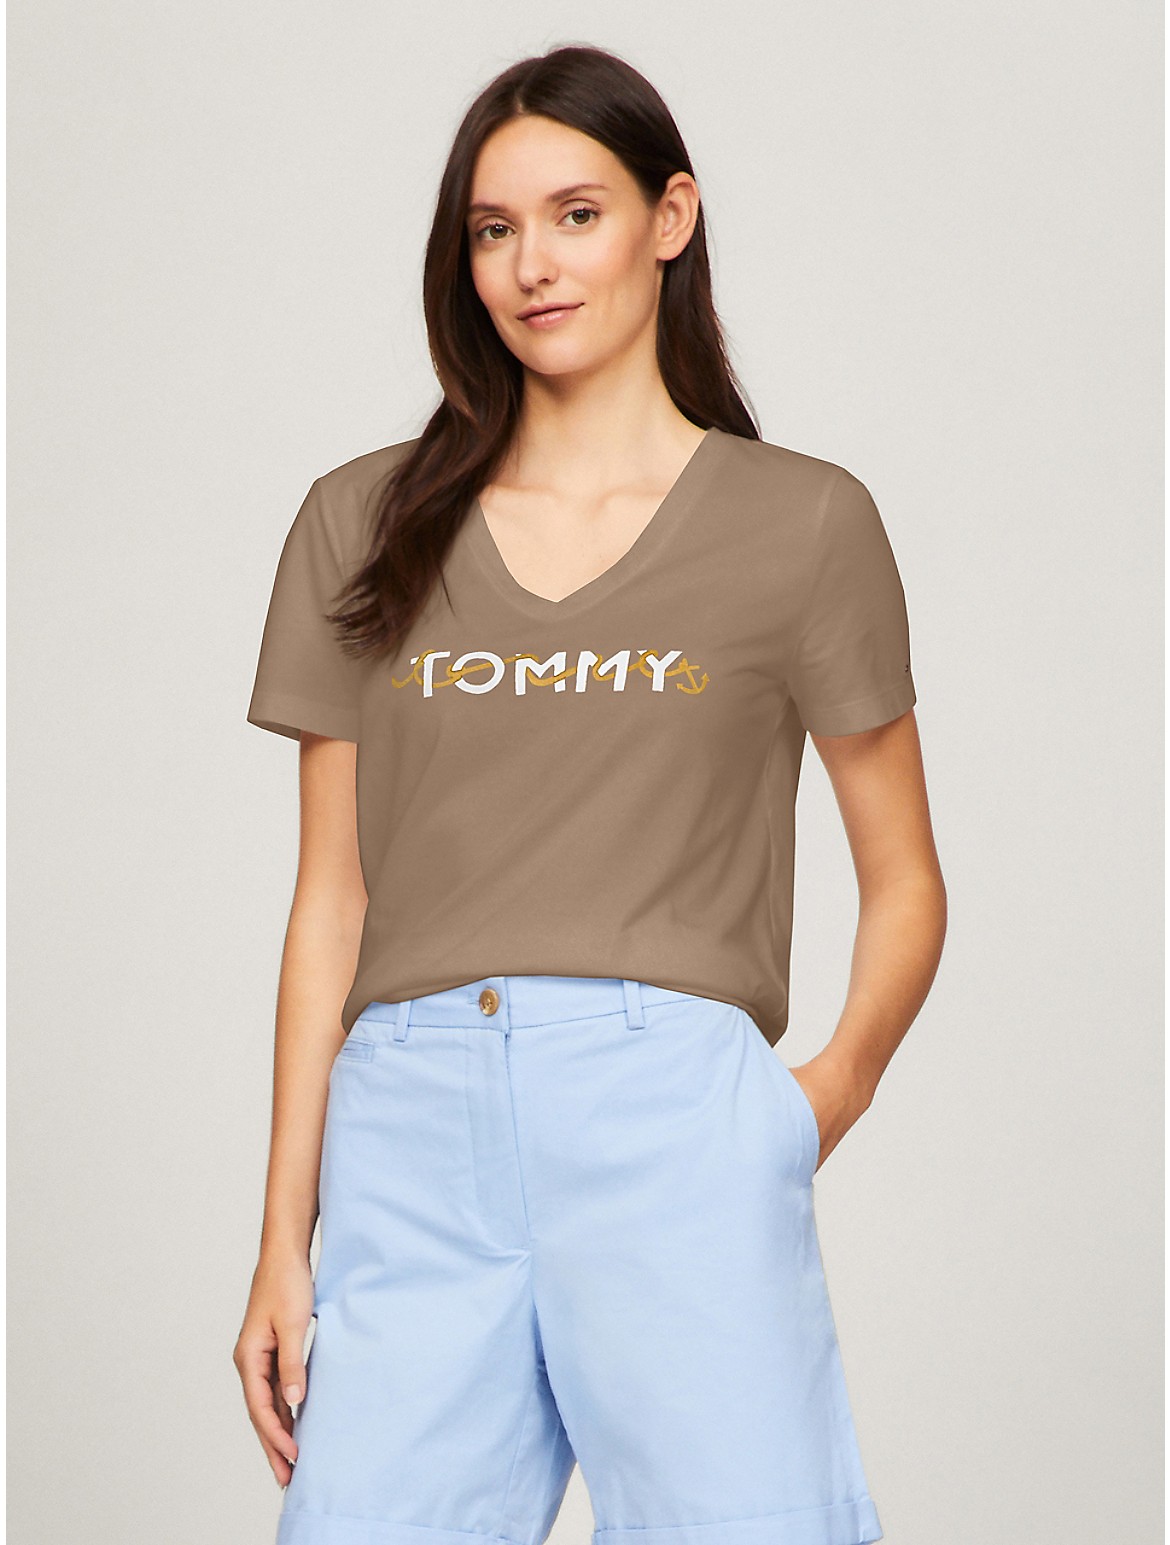 Tommy Hilfiger Women's Tommy Anchor Logo V-Neck T-Shirt